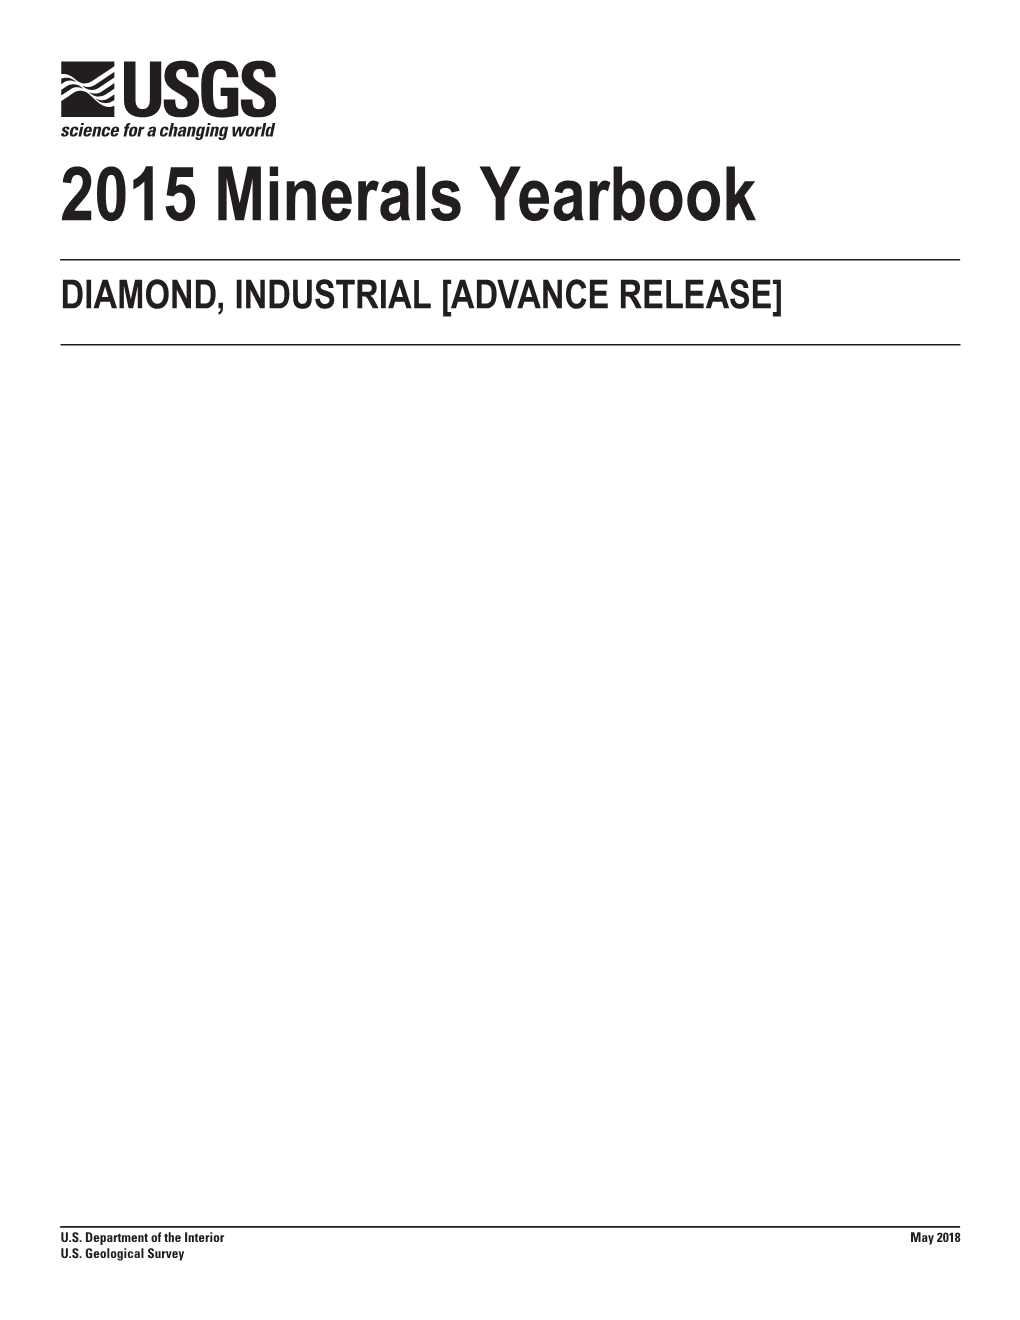 Diamond, Industrial 2015